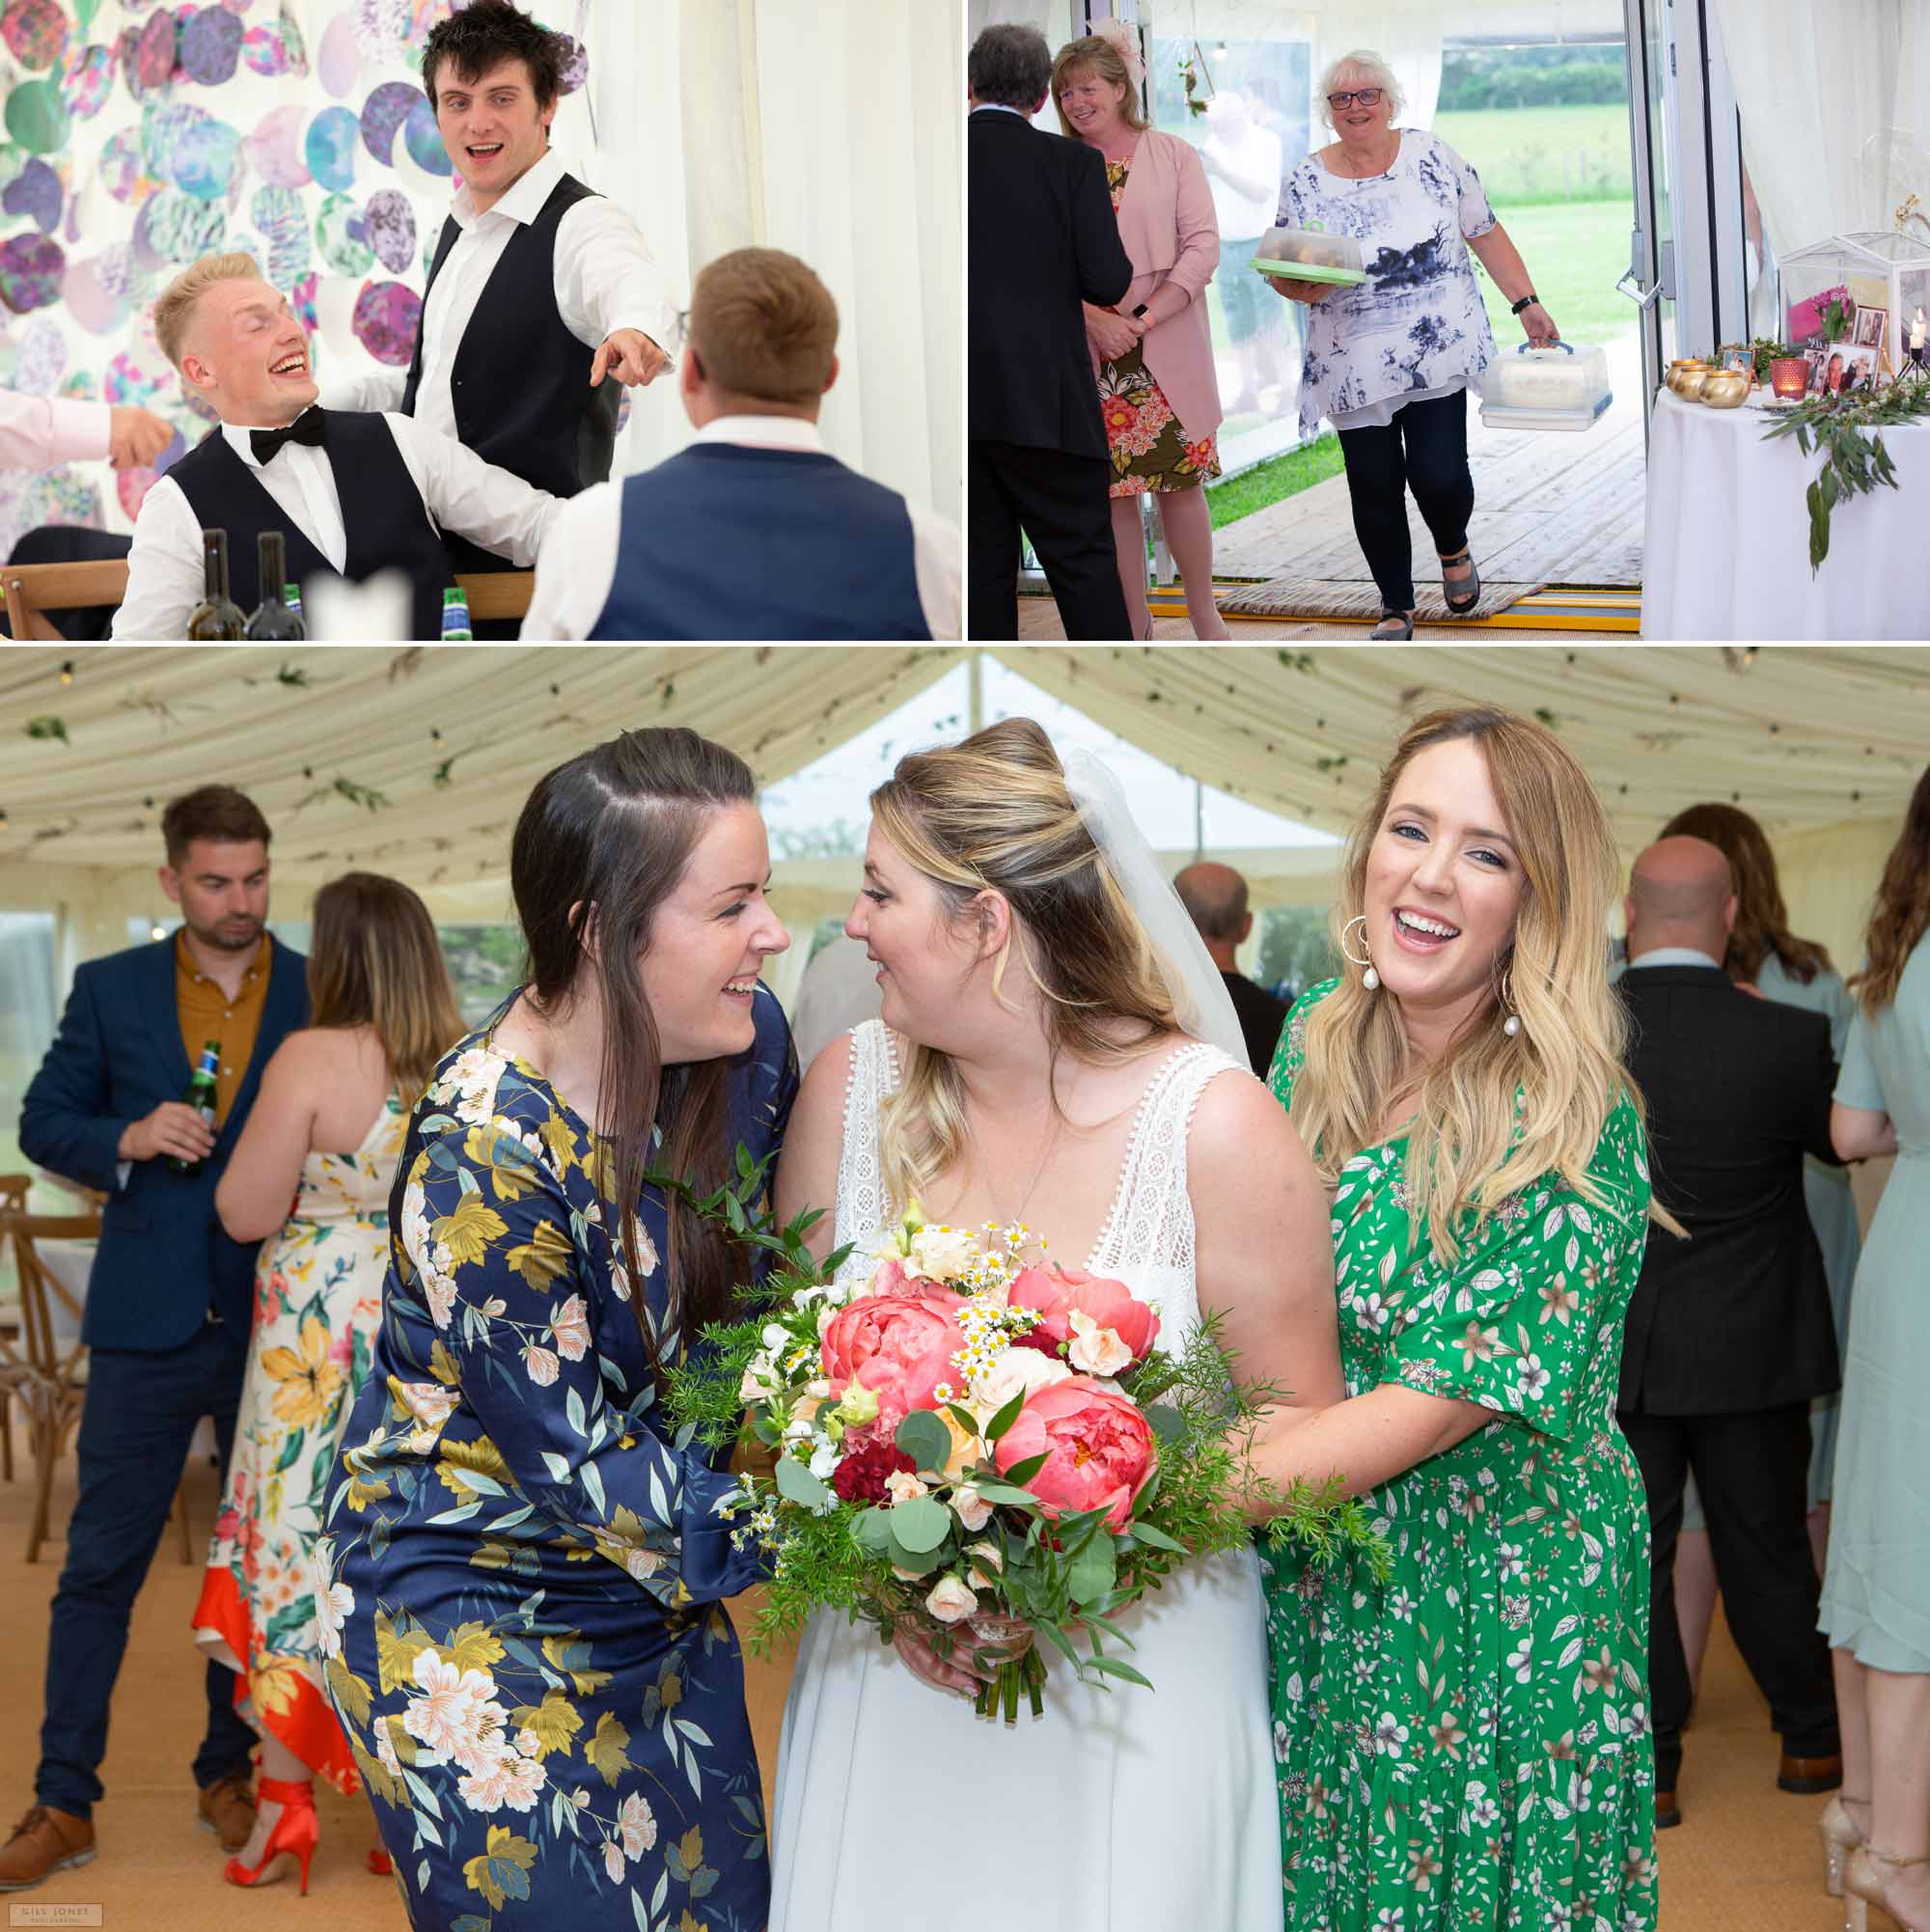 Anglesey wedding photographer